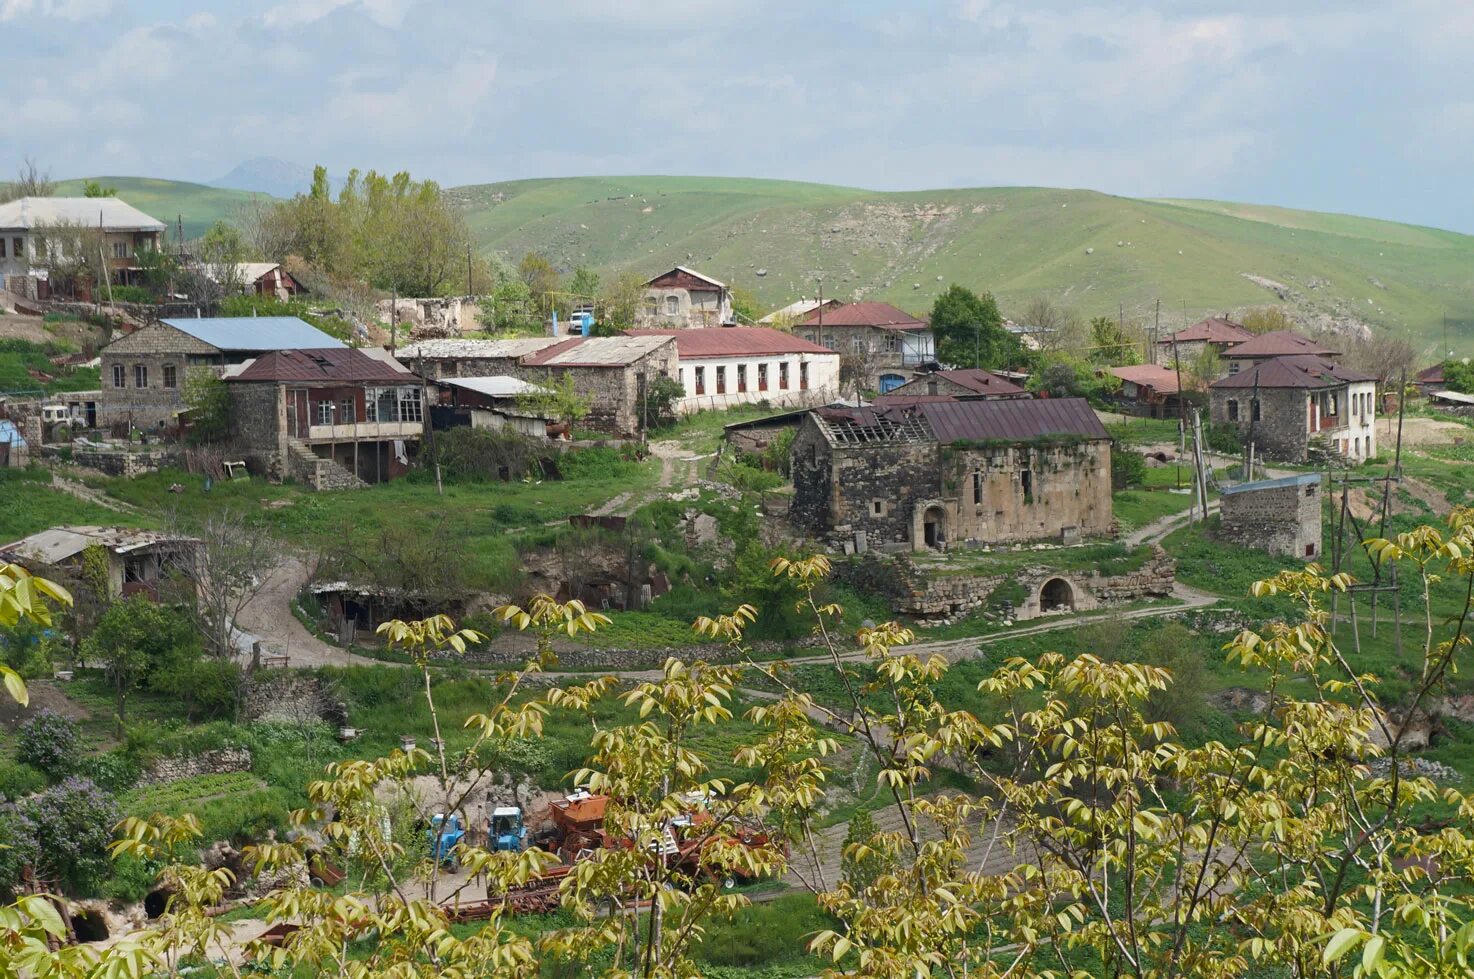 Сел арм. Село Арени Армения. Село Мецаван Армения. Село Арчут Армения. Деревня Арени в Армении.